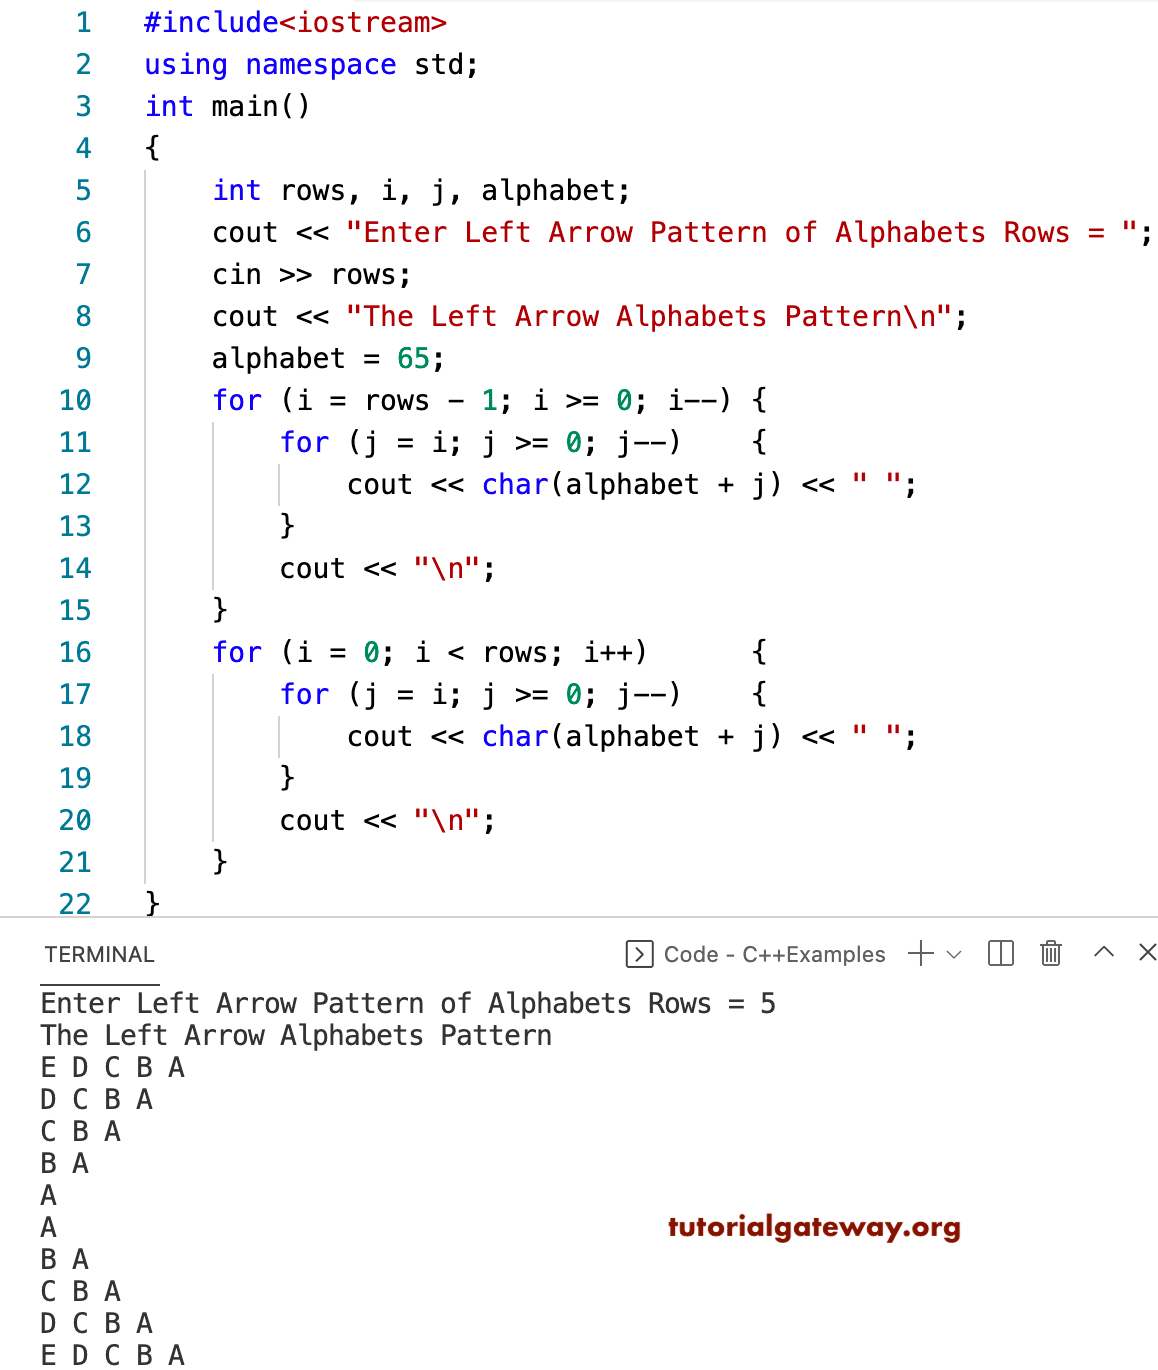 C++ Program to Print Left Arrow Alphabets Pattern